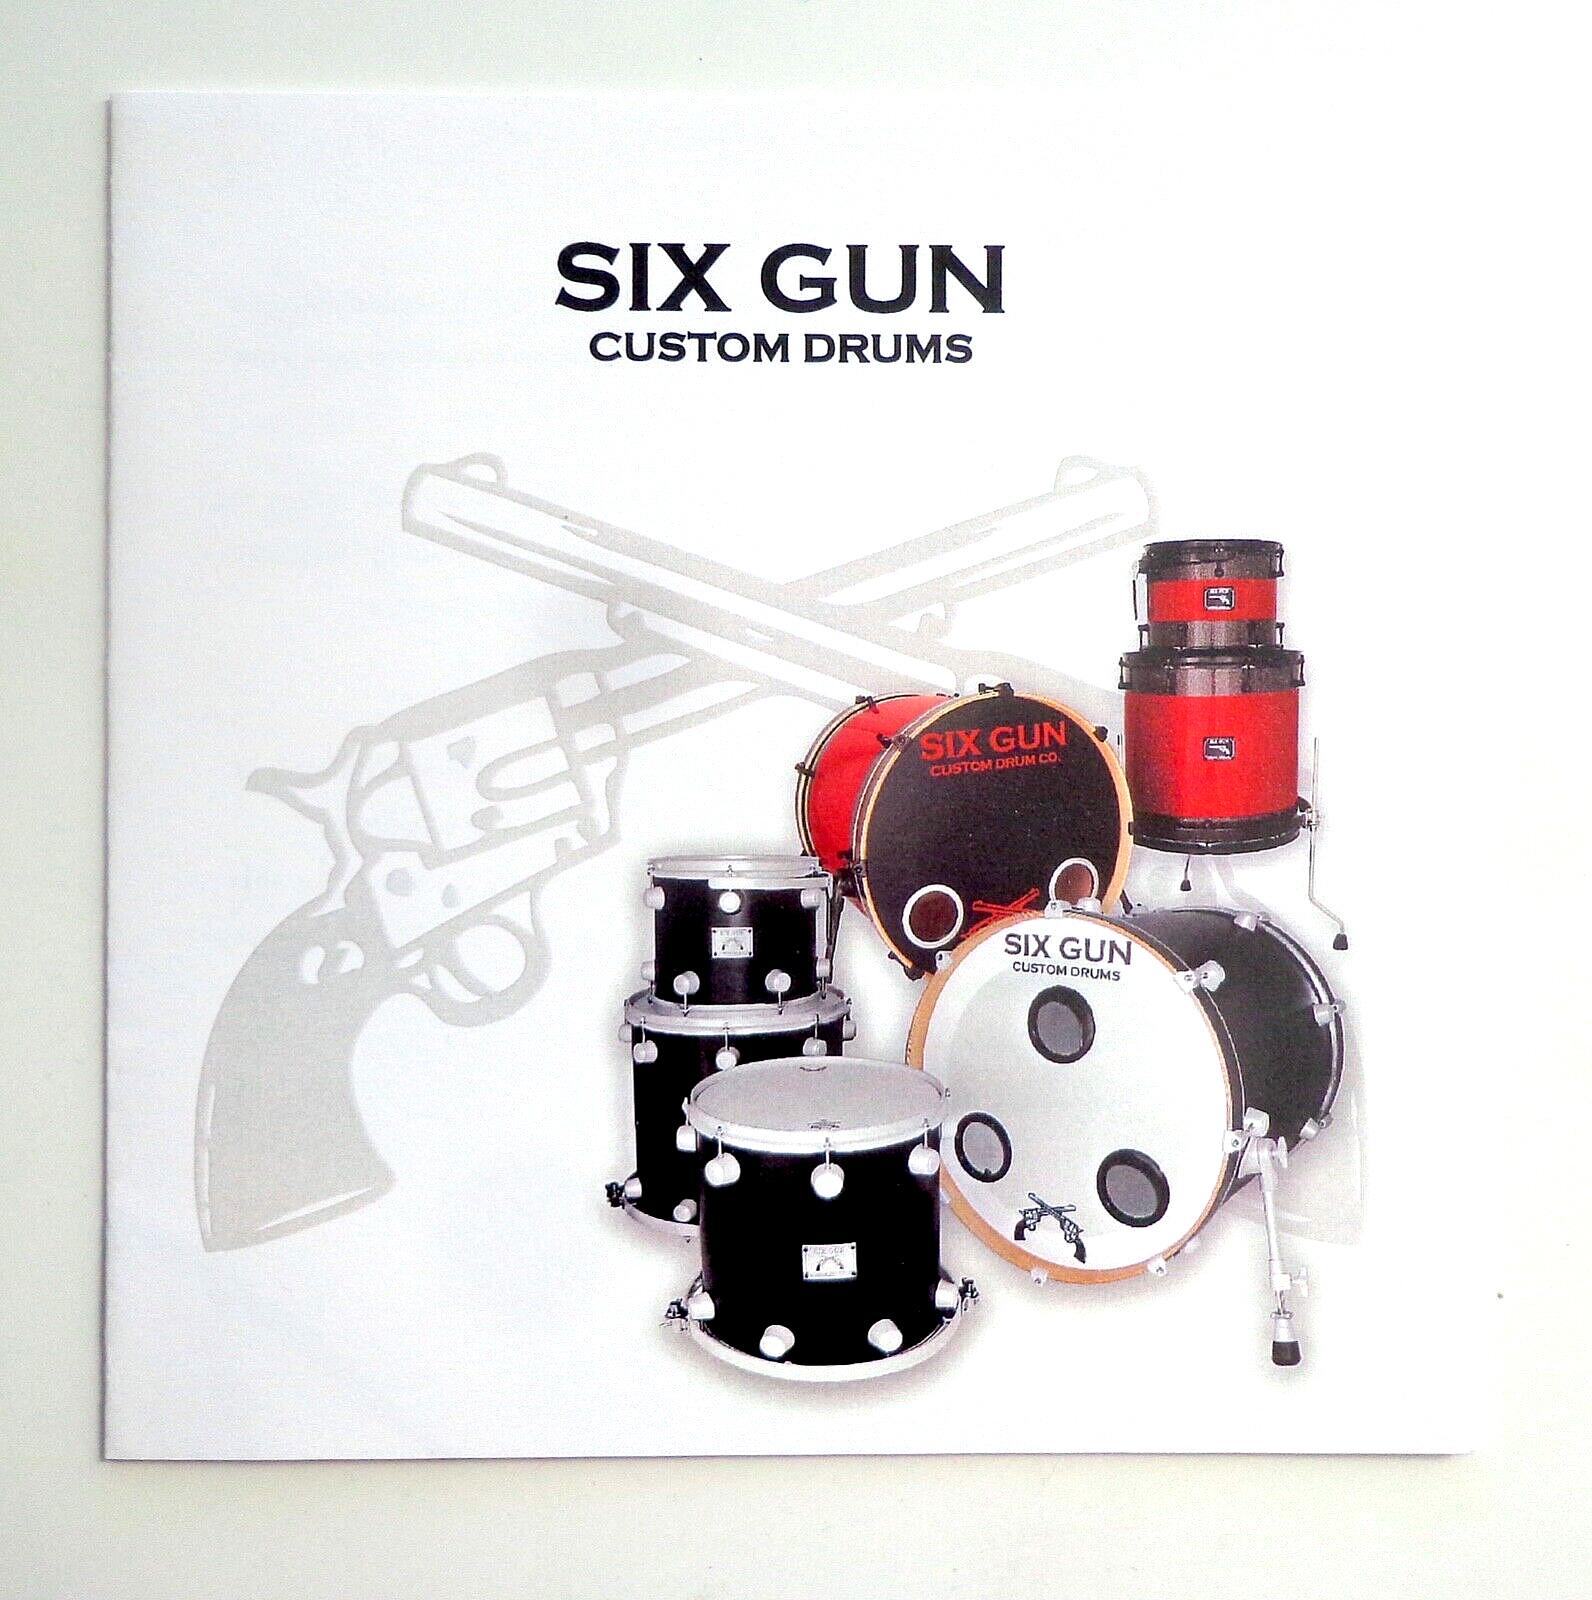 SIX GUN CUSTOM DRUMS BROCHURE - Product Information Catalog + Sticker